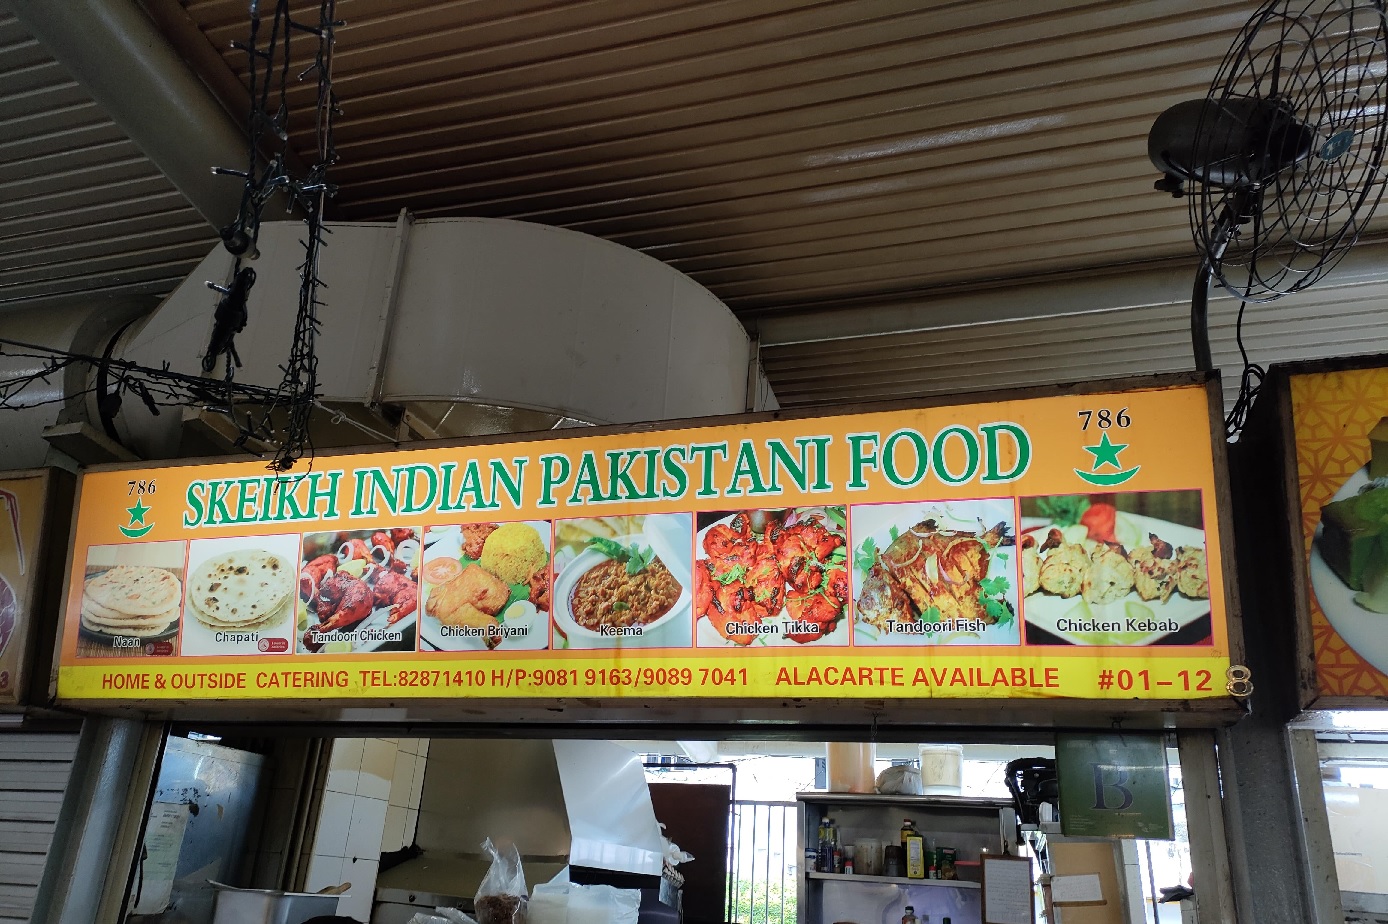 SHEIKH INDIAN PAKISTANI FOOD